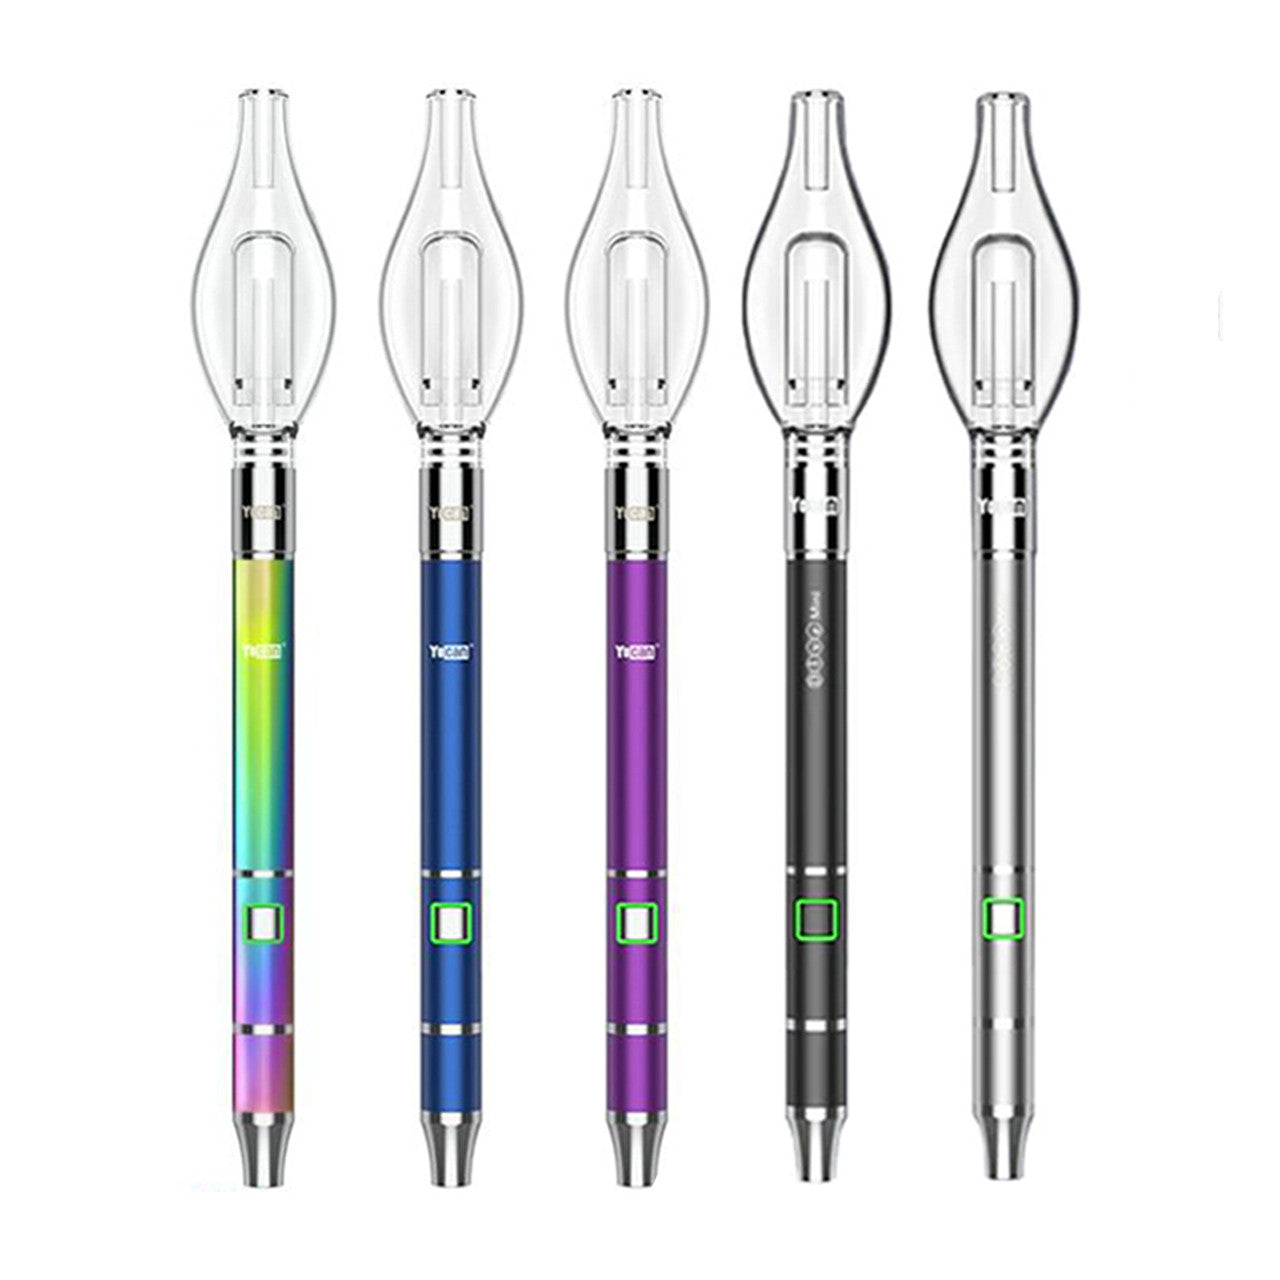 Yocan - Dive Mini 400mAh Electronic Nectar Collector Pen